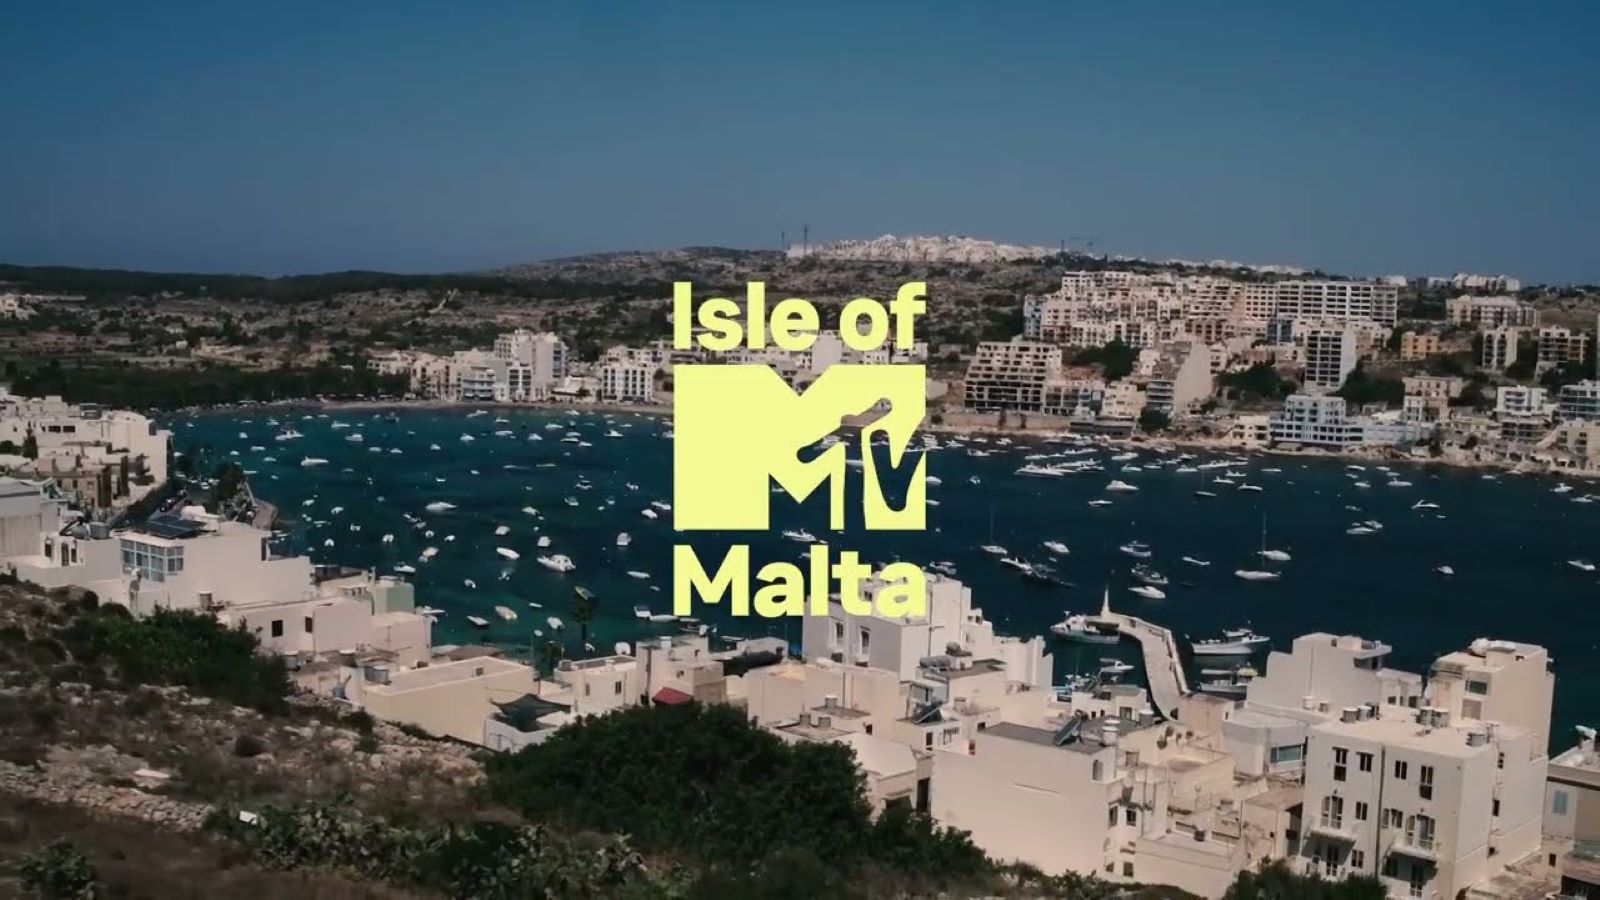 Isle of MTV Malta: photos and performances of international artists